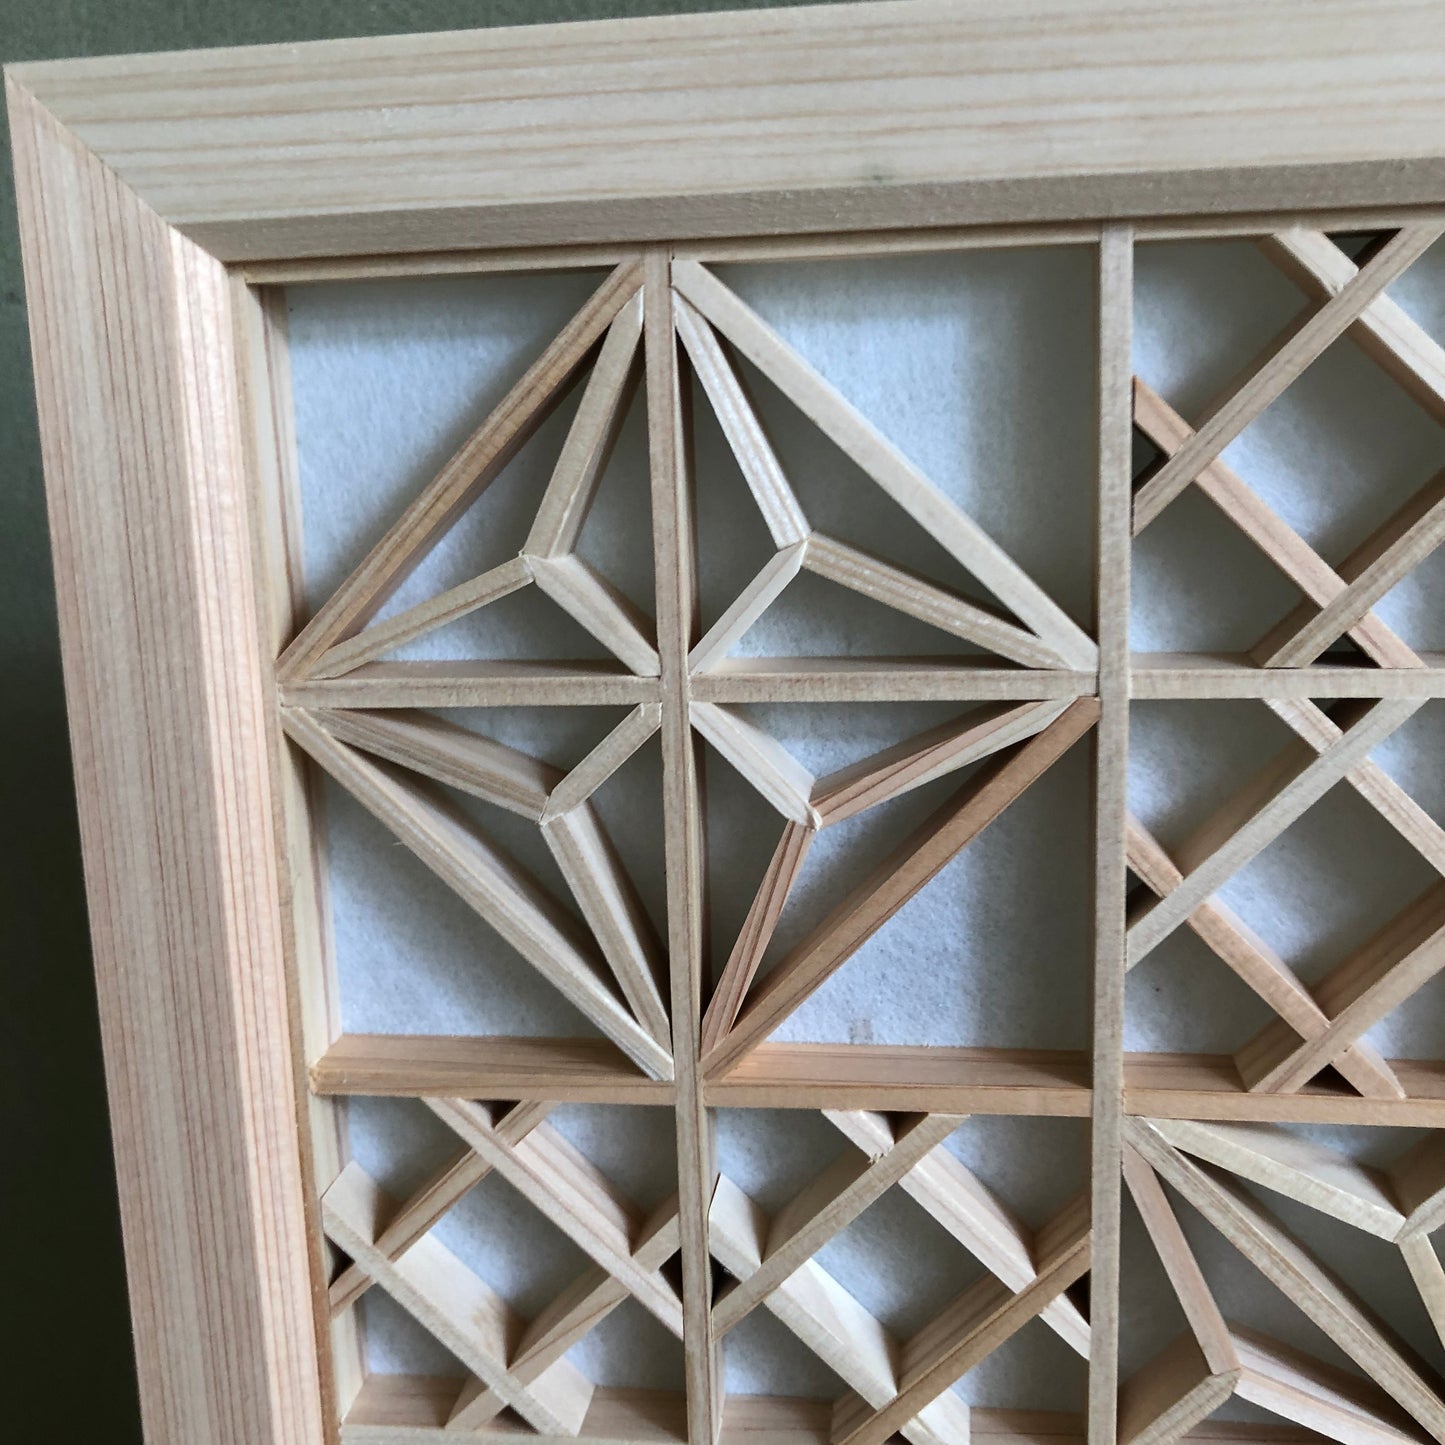 Kumiko work art panel M pattern 4 domestic cypress copy with dedicated stand